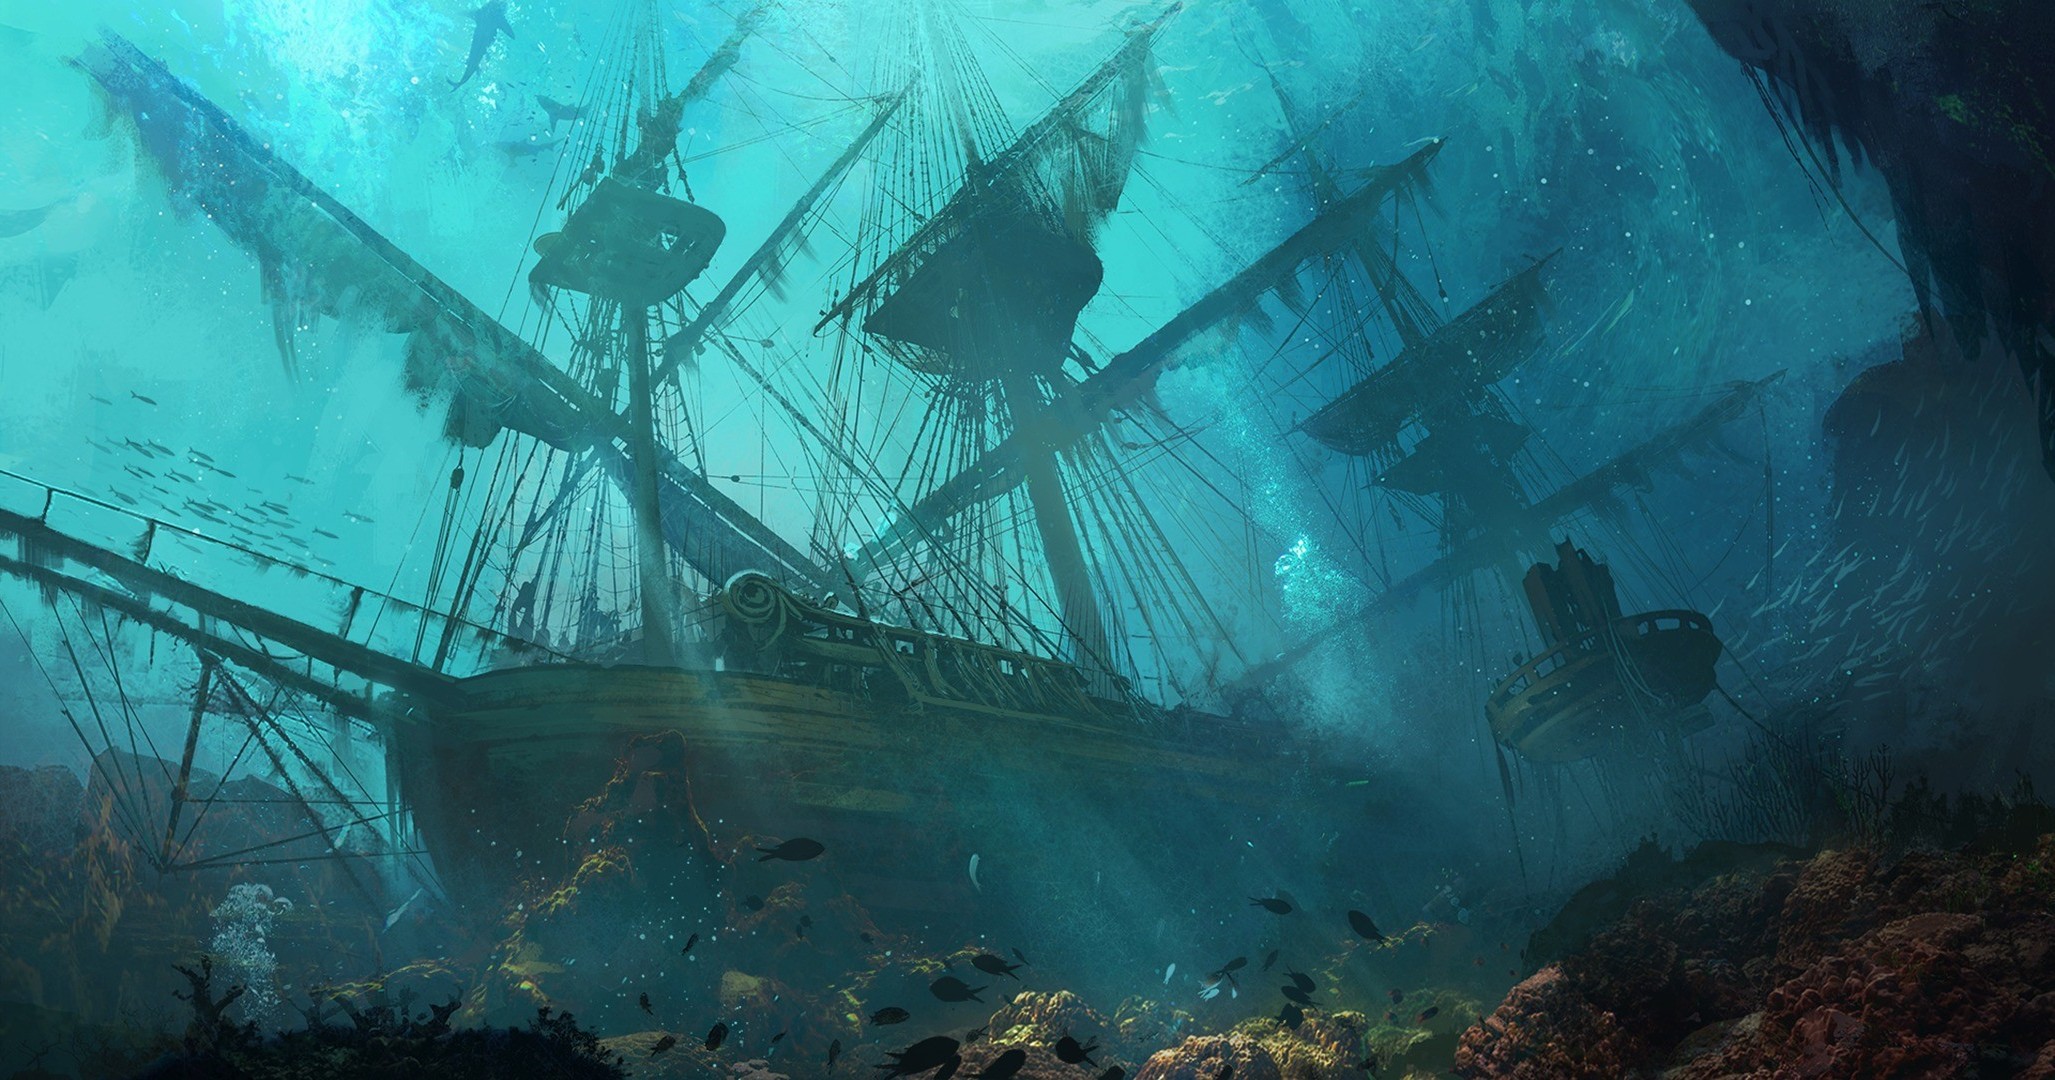 204869-sinking_ships-ship-drawing-sea-fantasy_art.jpg.